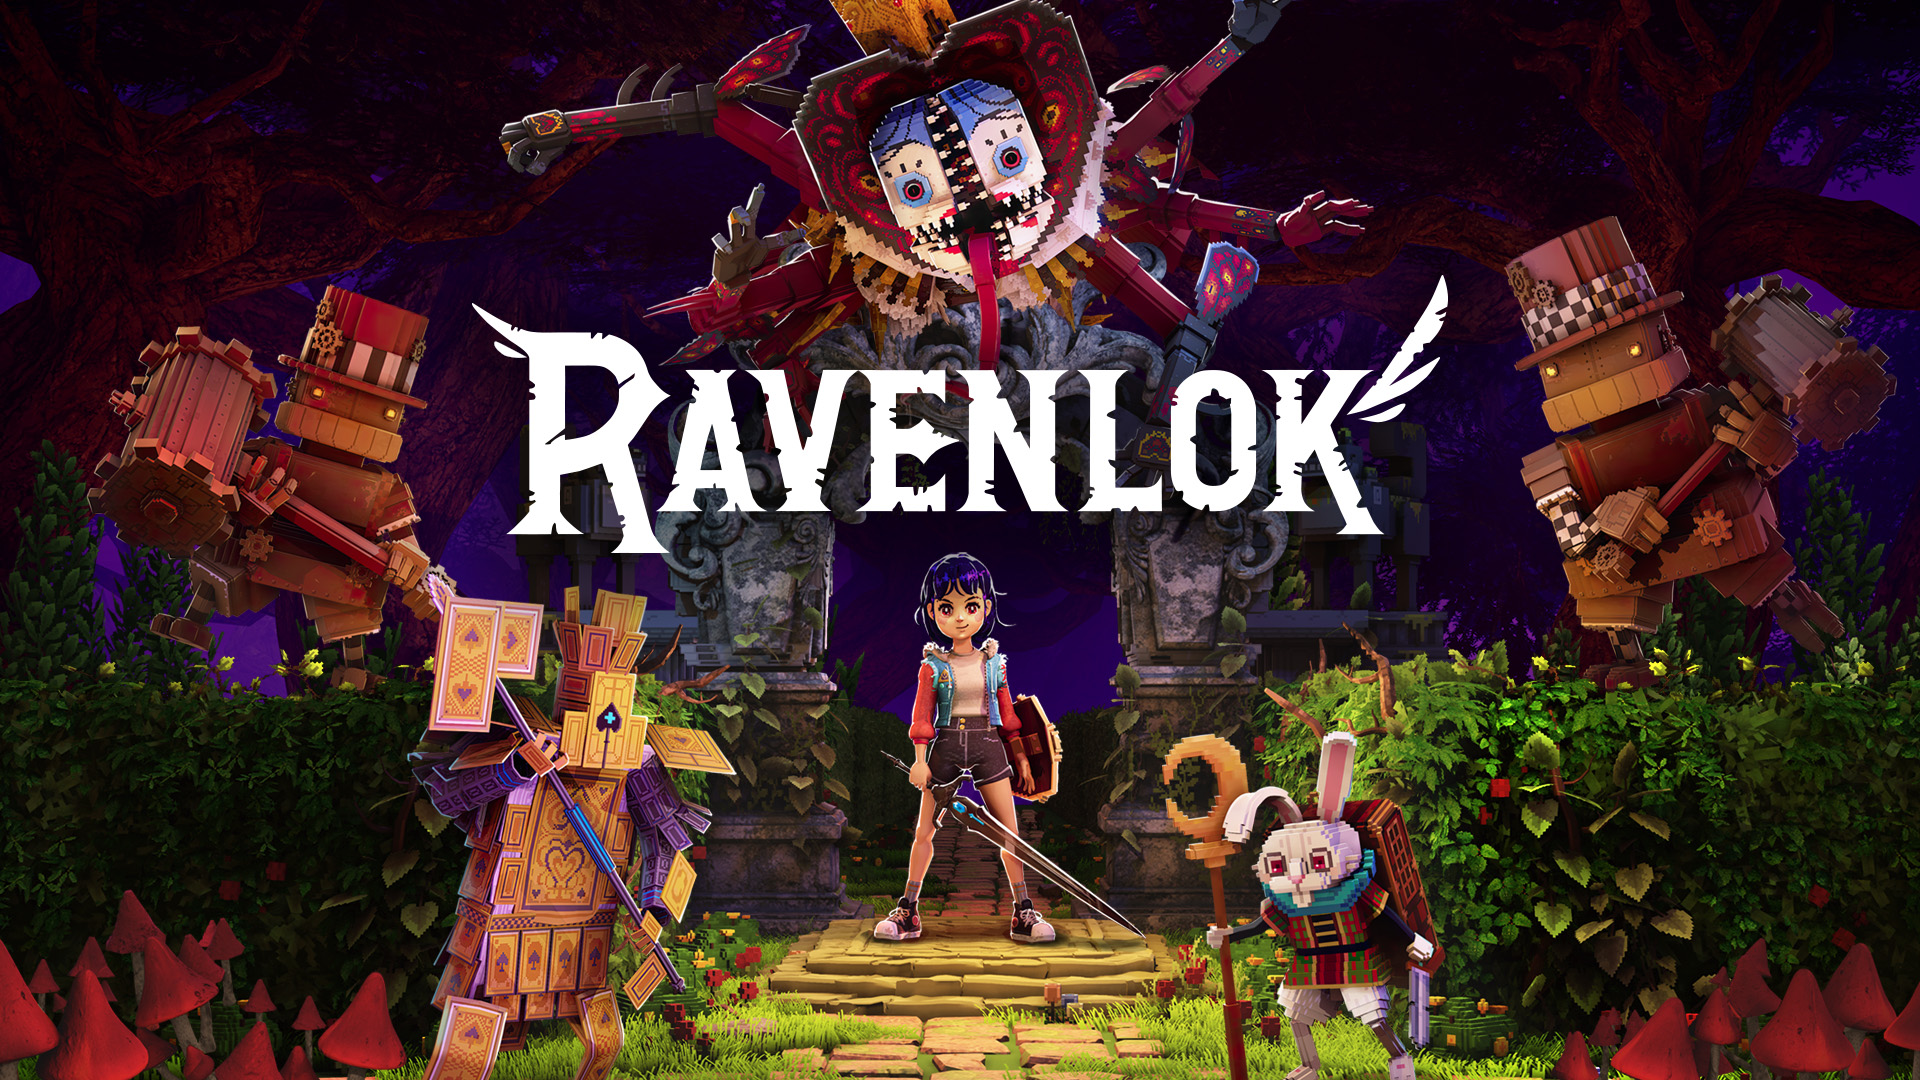 Inside Xbox Collection X|S Optimized: Ravenlok